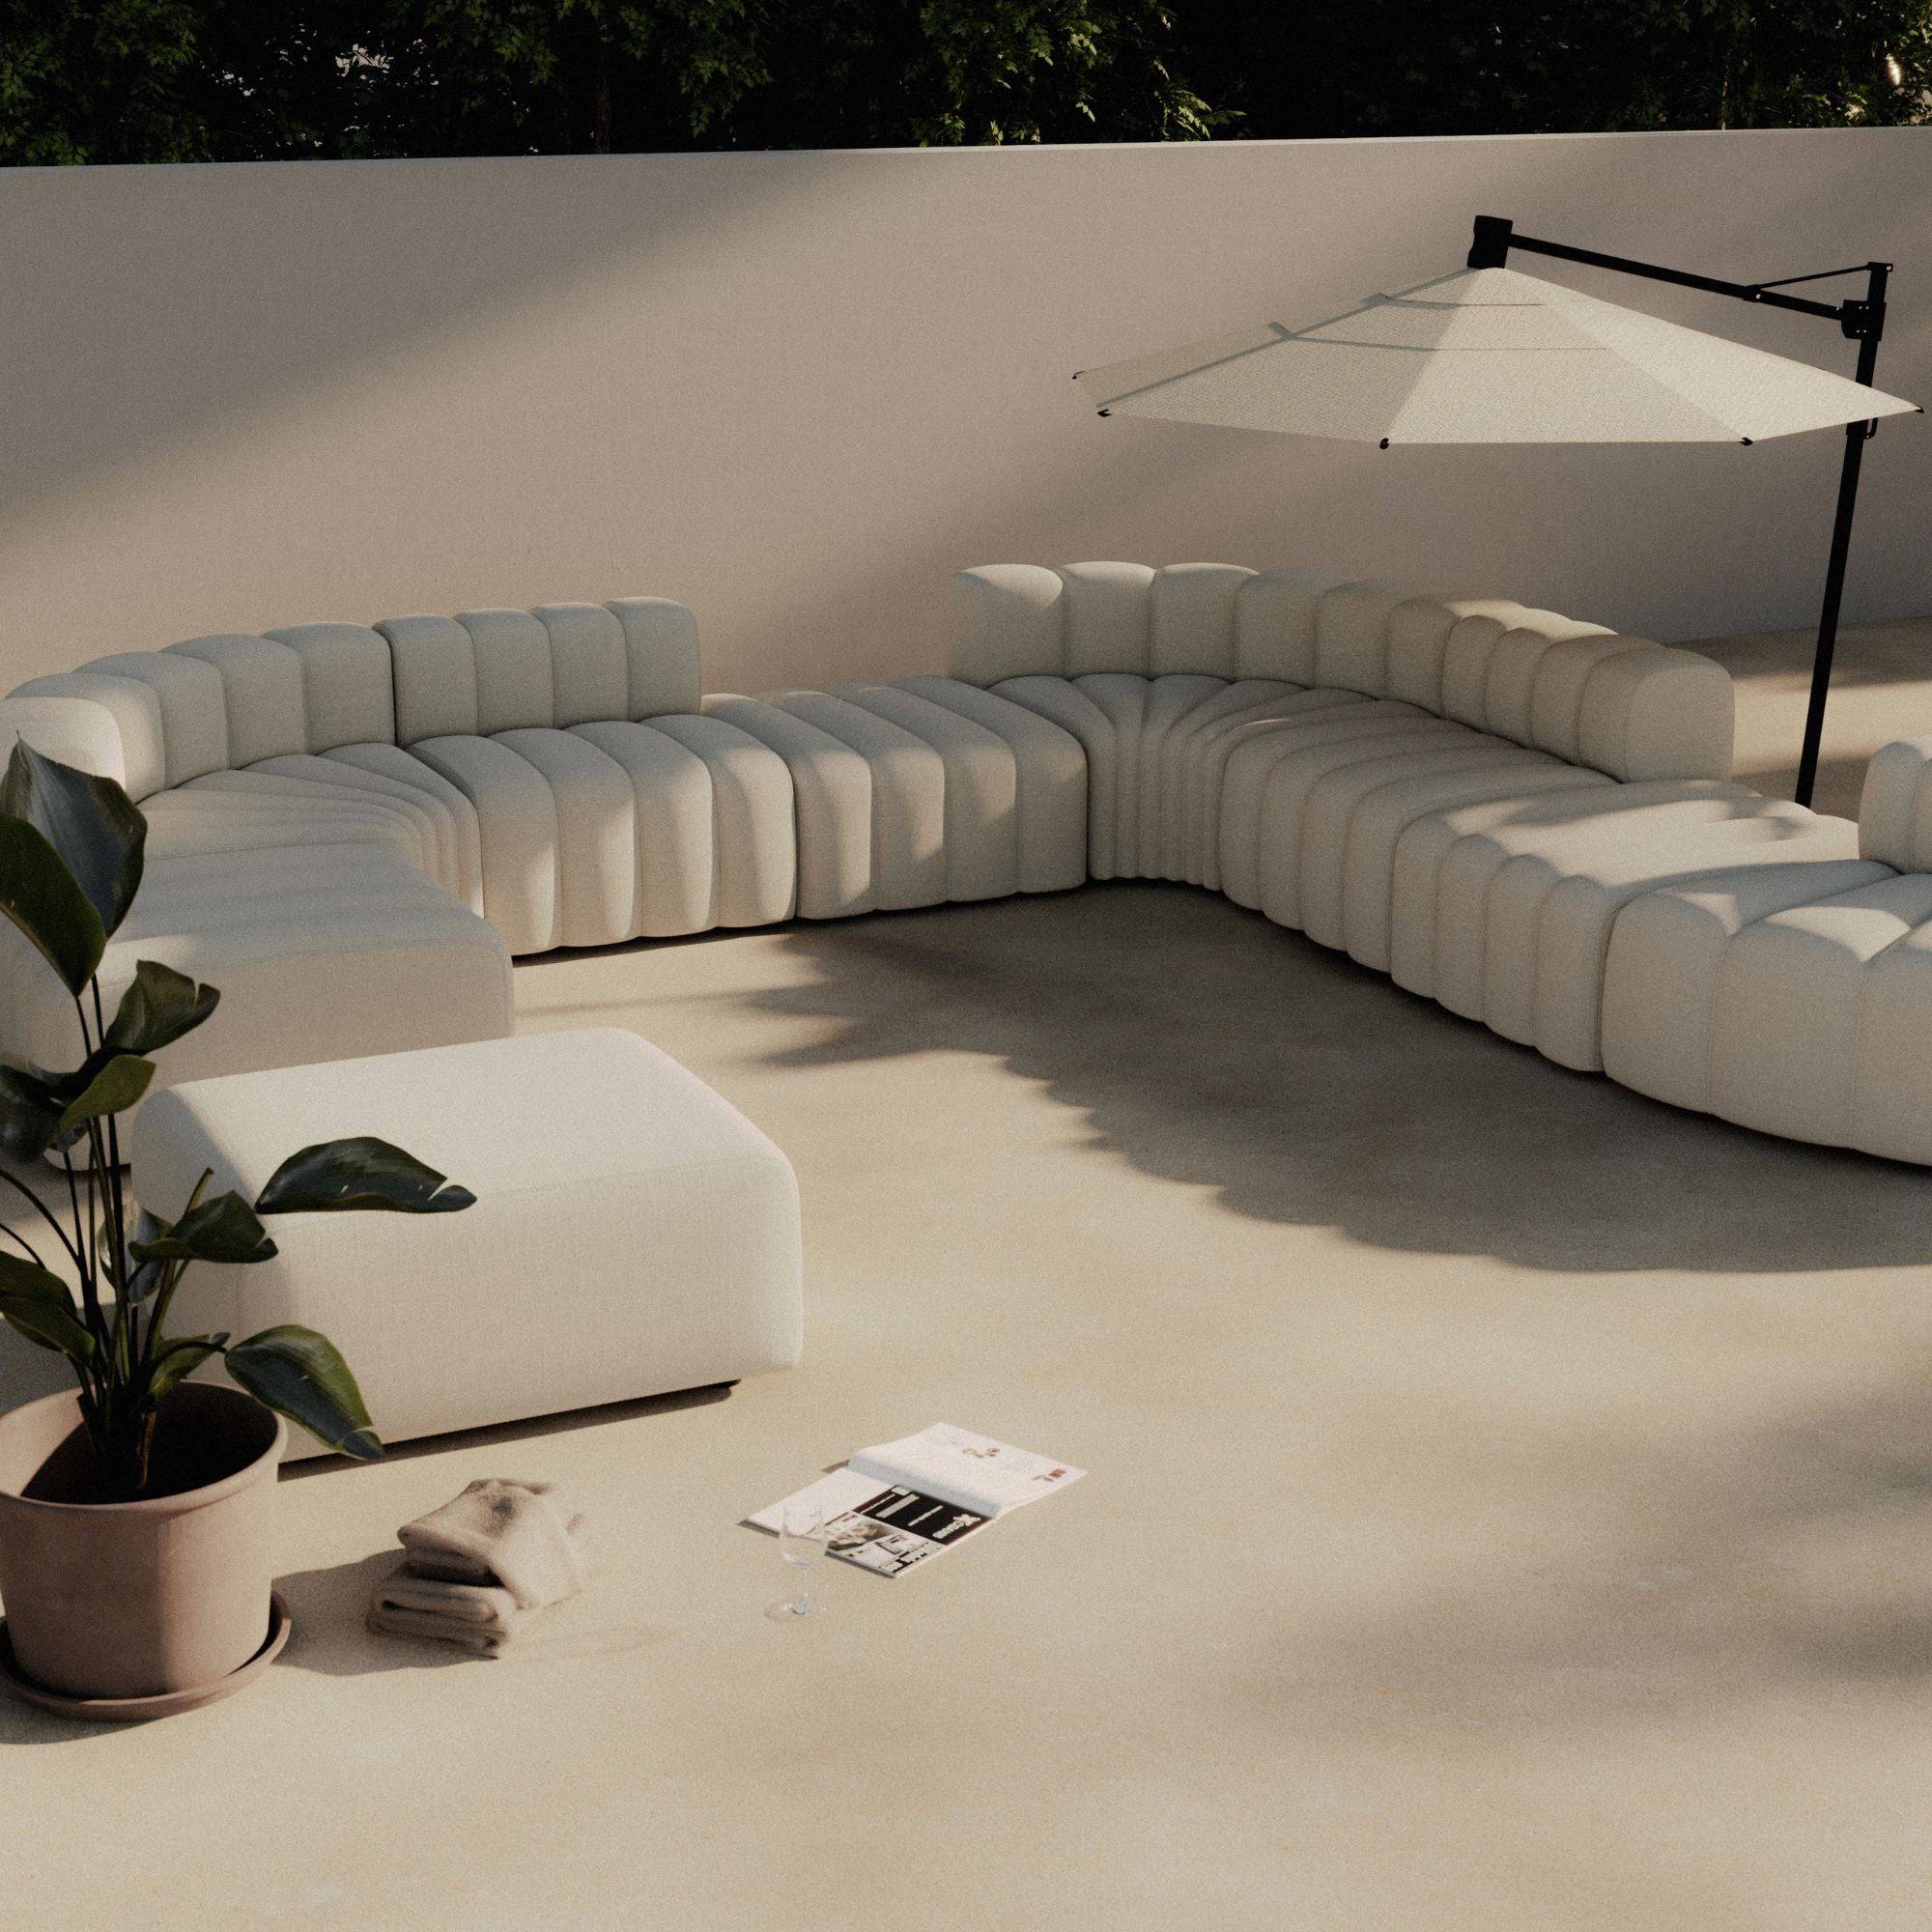 Outdoor Studio 4 Sofa - THAT COOL LIVING